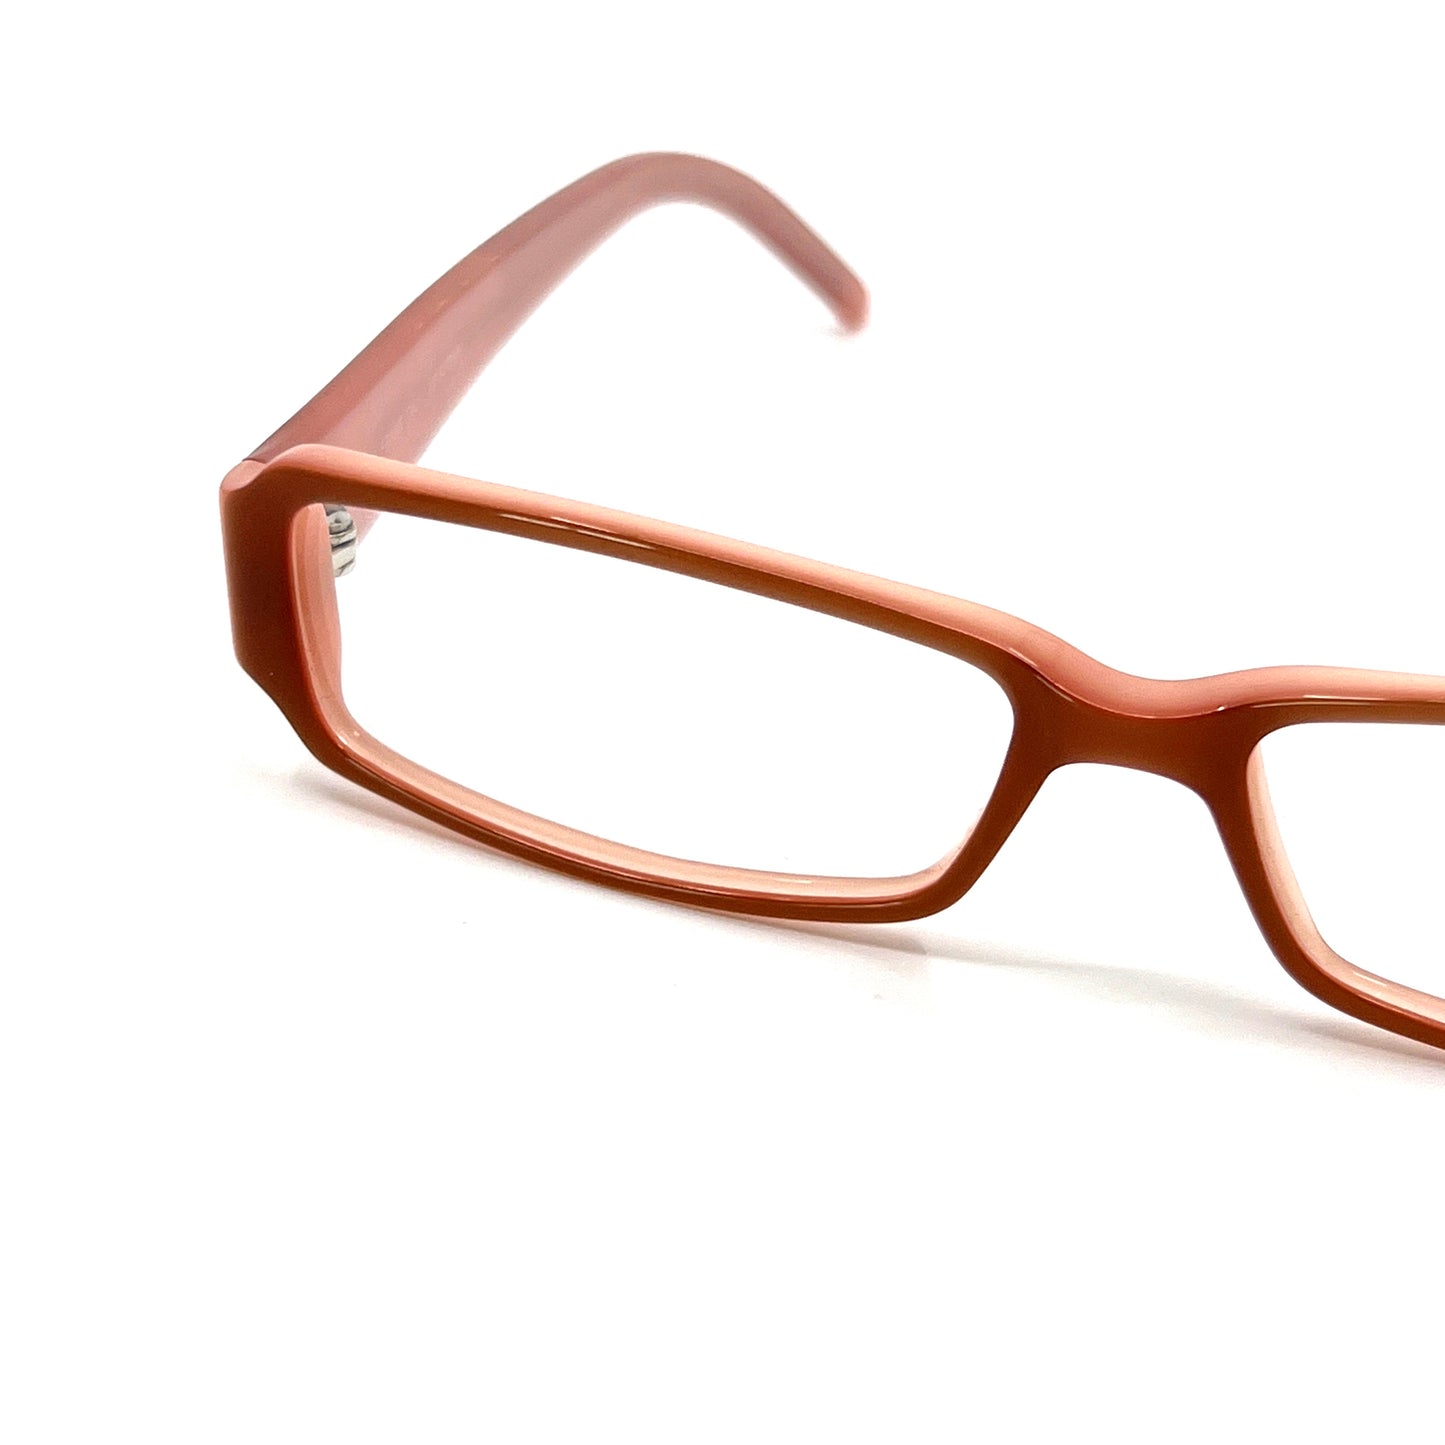 FENDI Eyeglasses F664 255